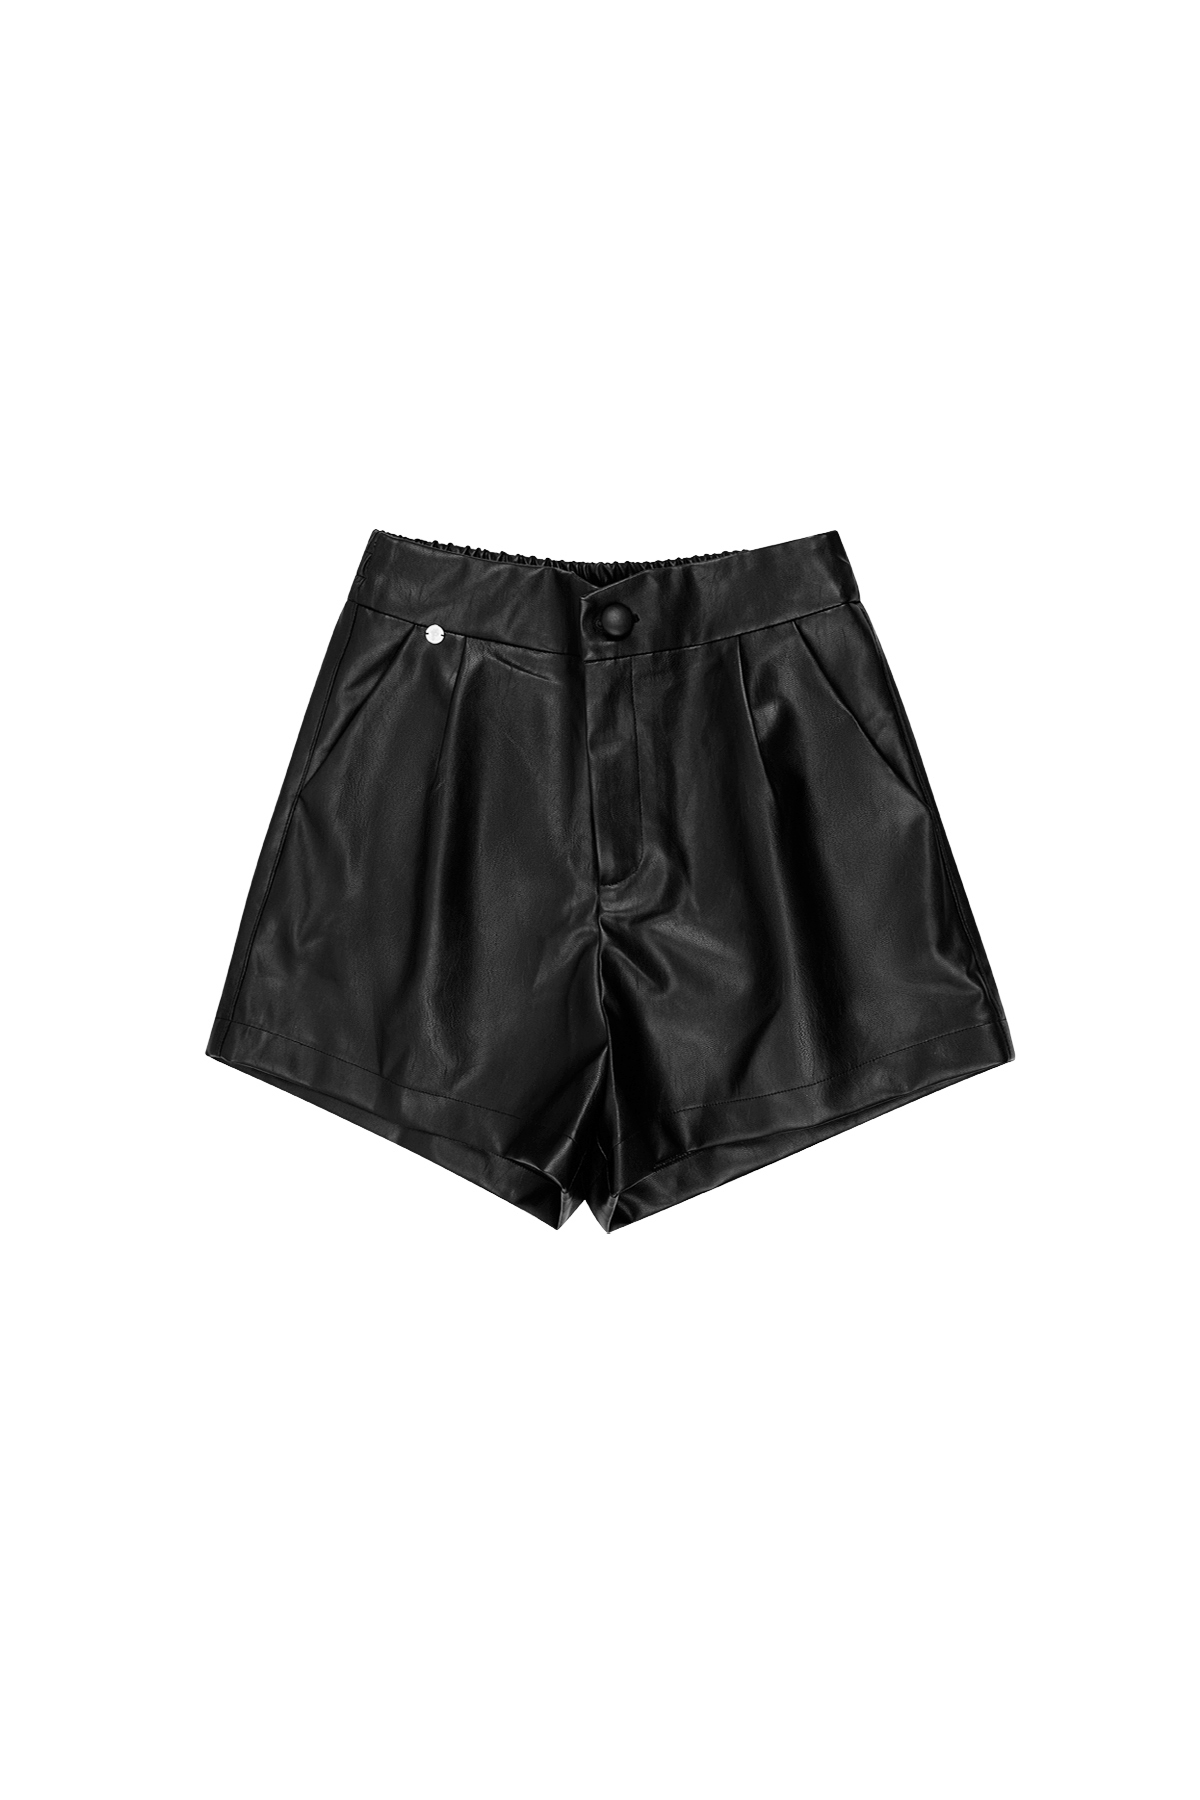 PU leather high waisted shorts - black h5 